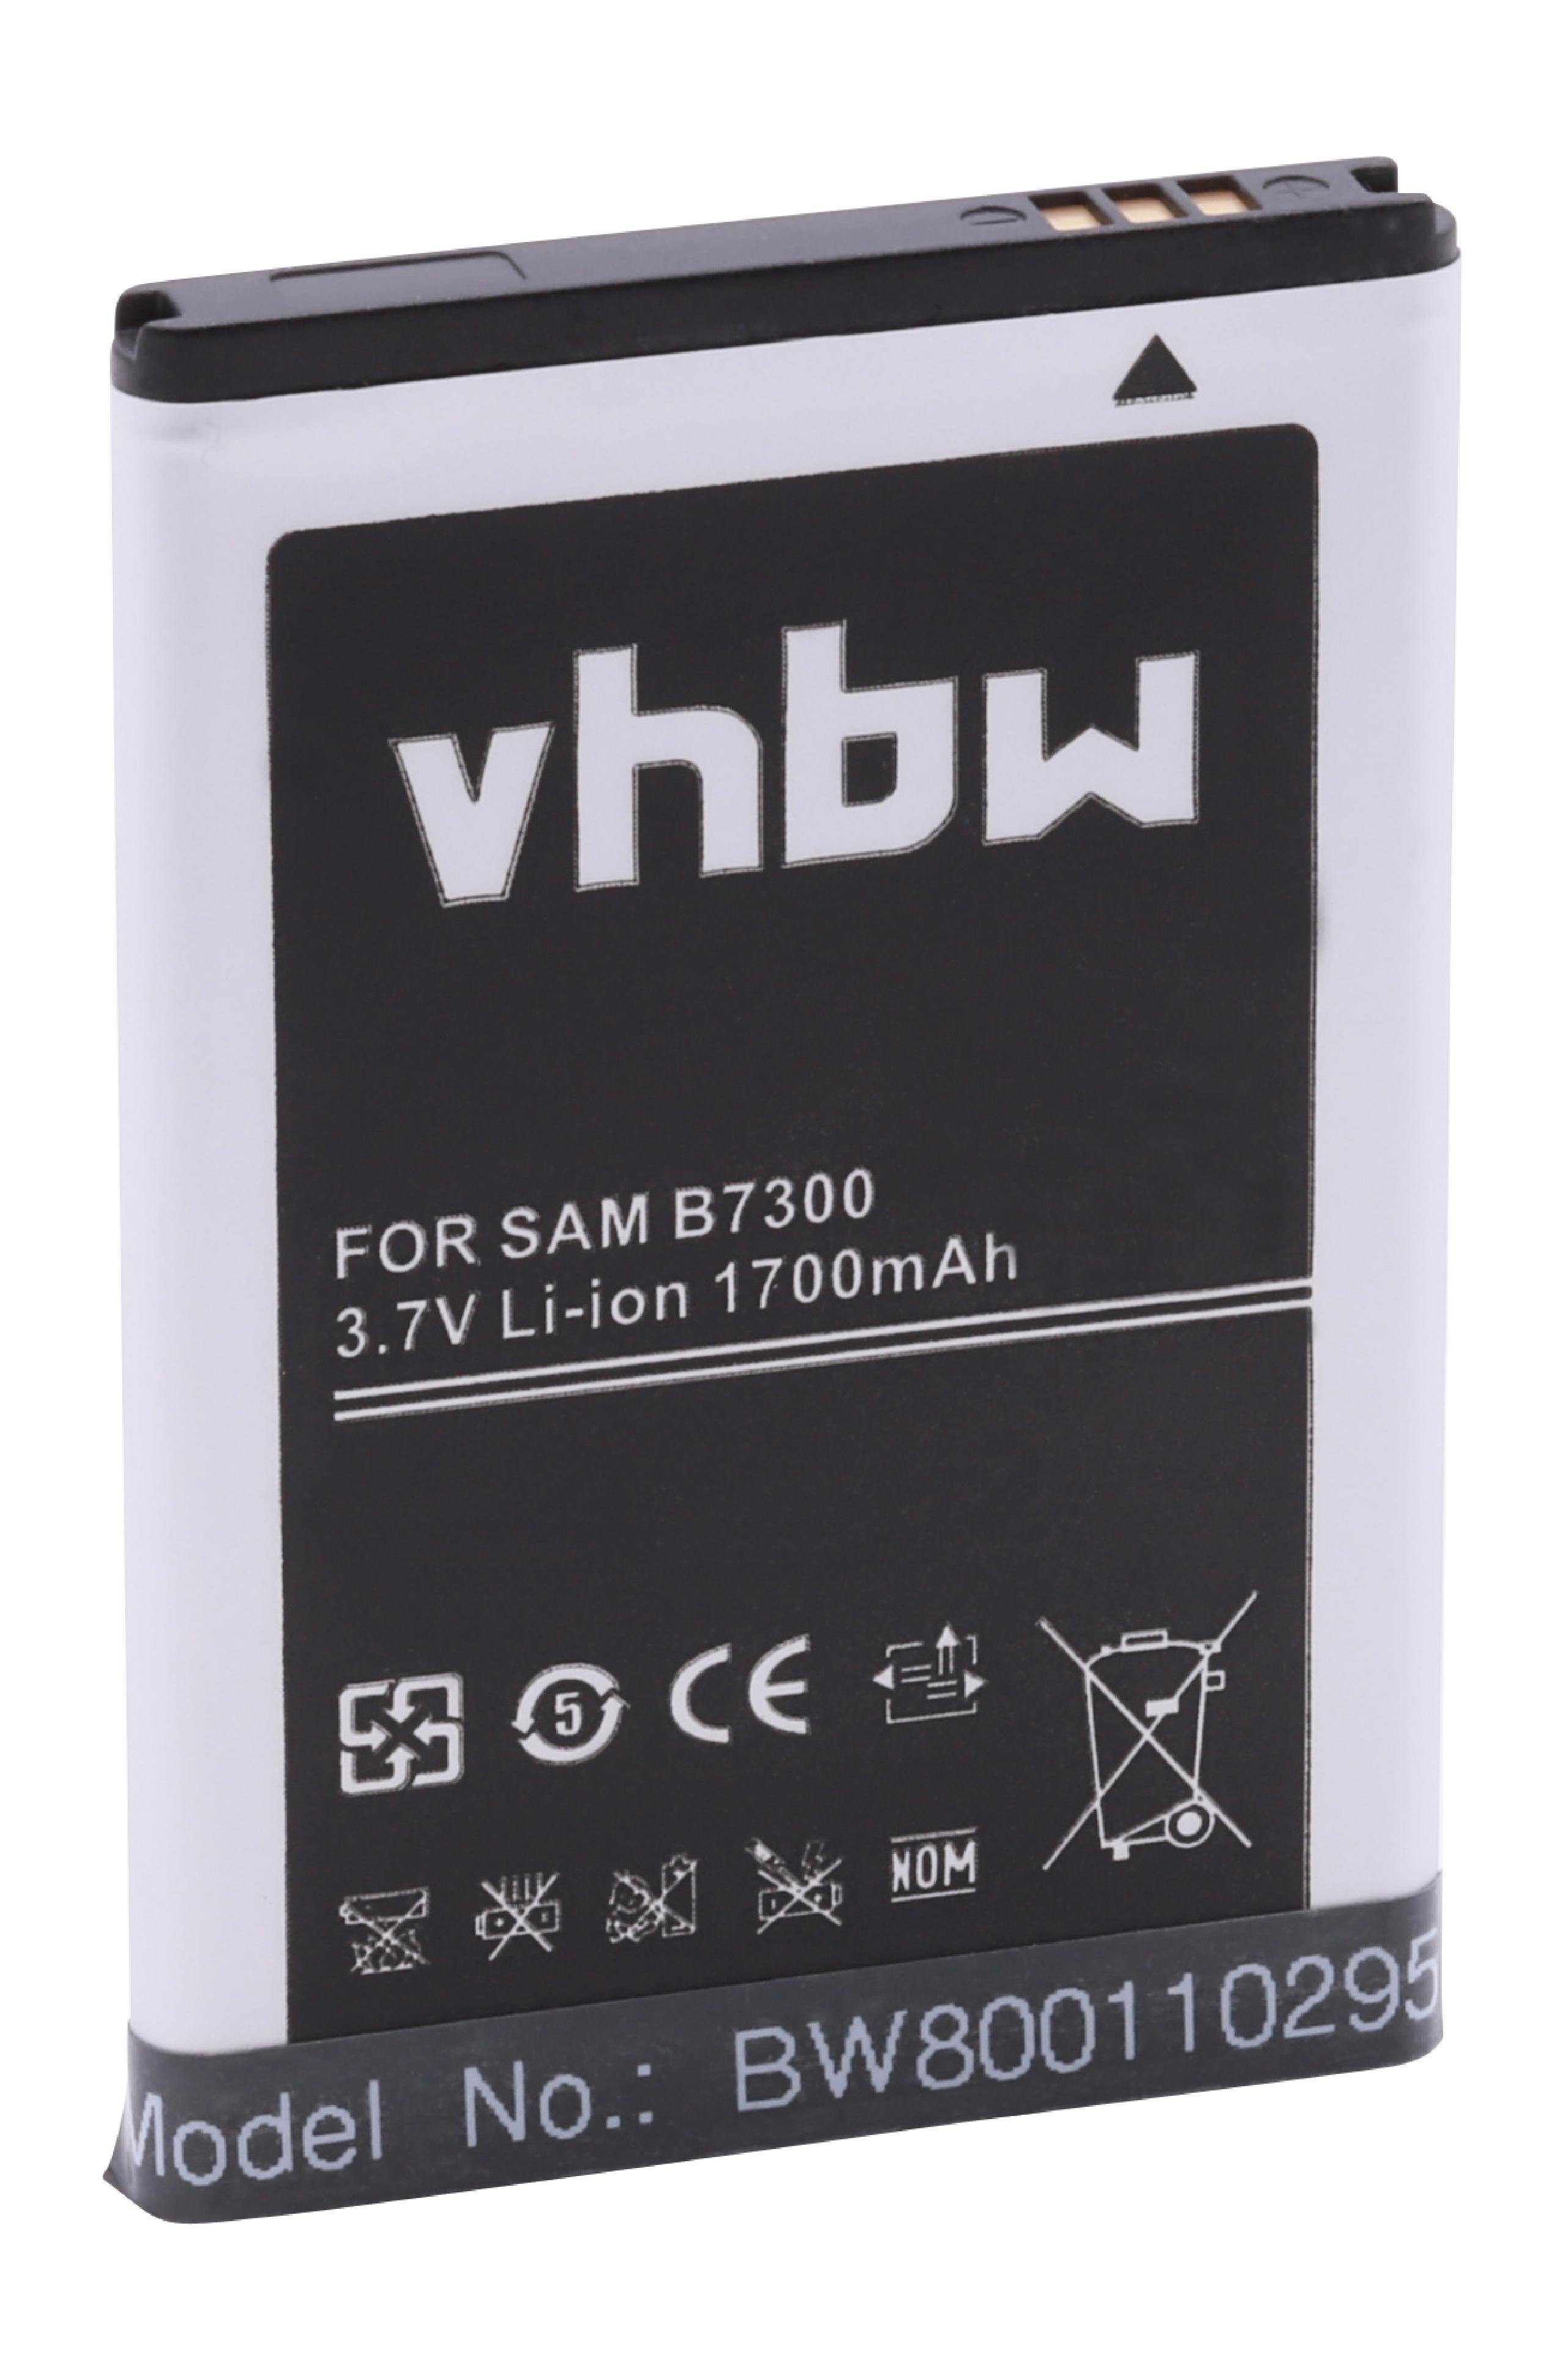 vhbw passend für Samsung SPH-M930, SPH-M910 Intercept, SPH-M920 Transform, Smartphone-Akku 1700 mAh